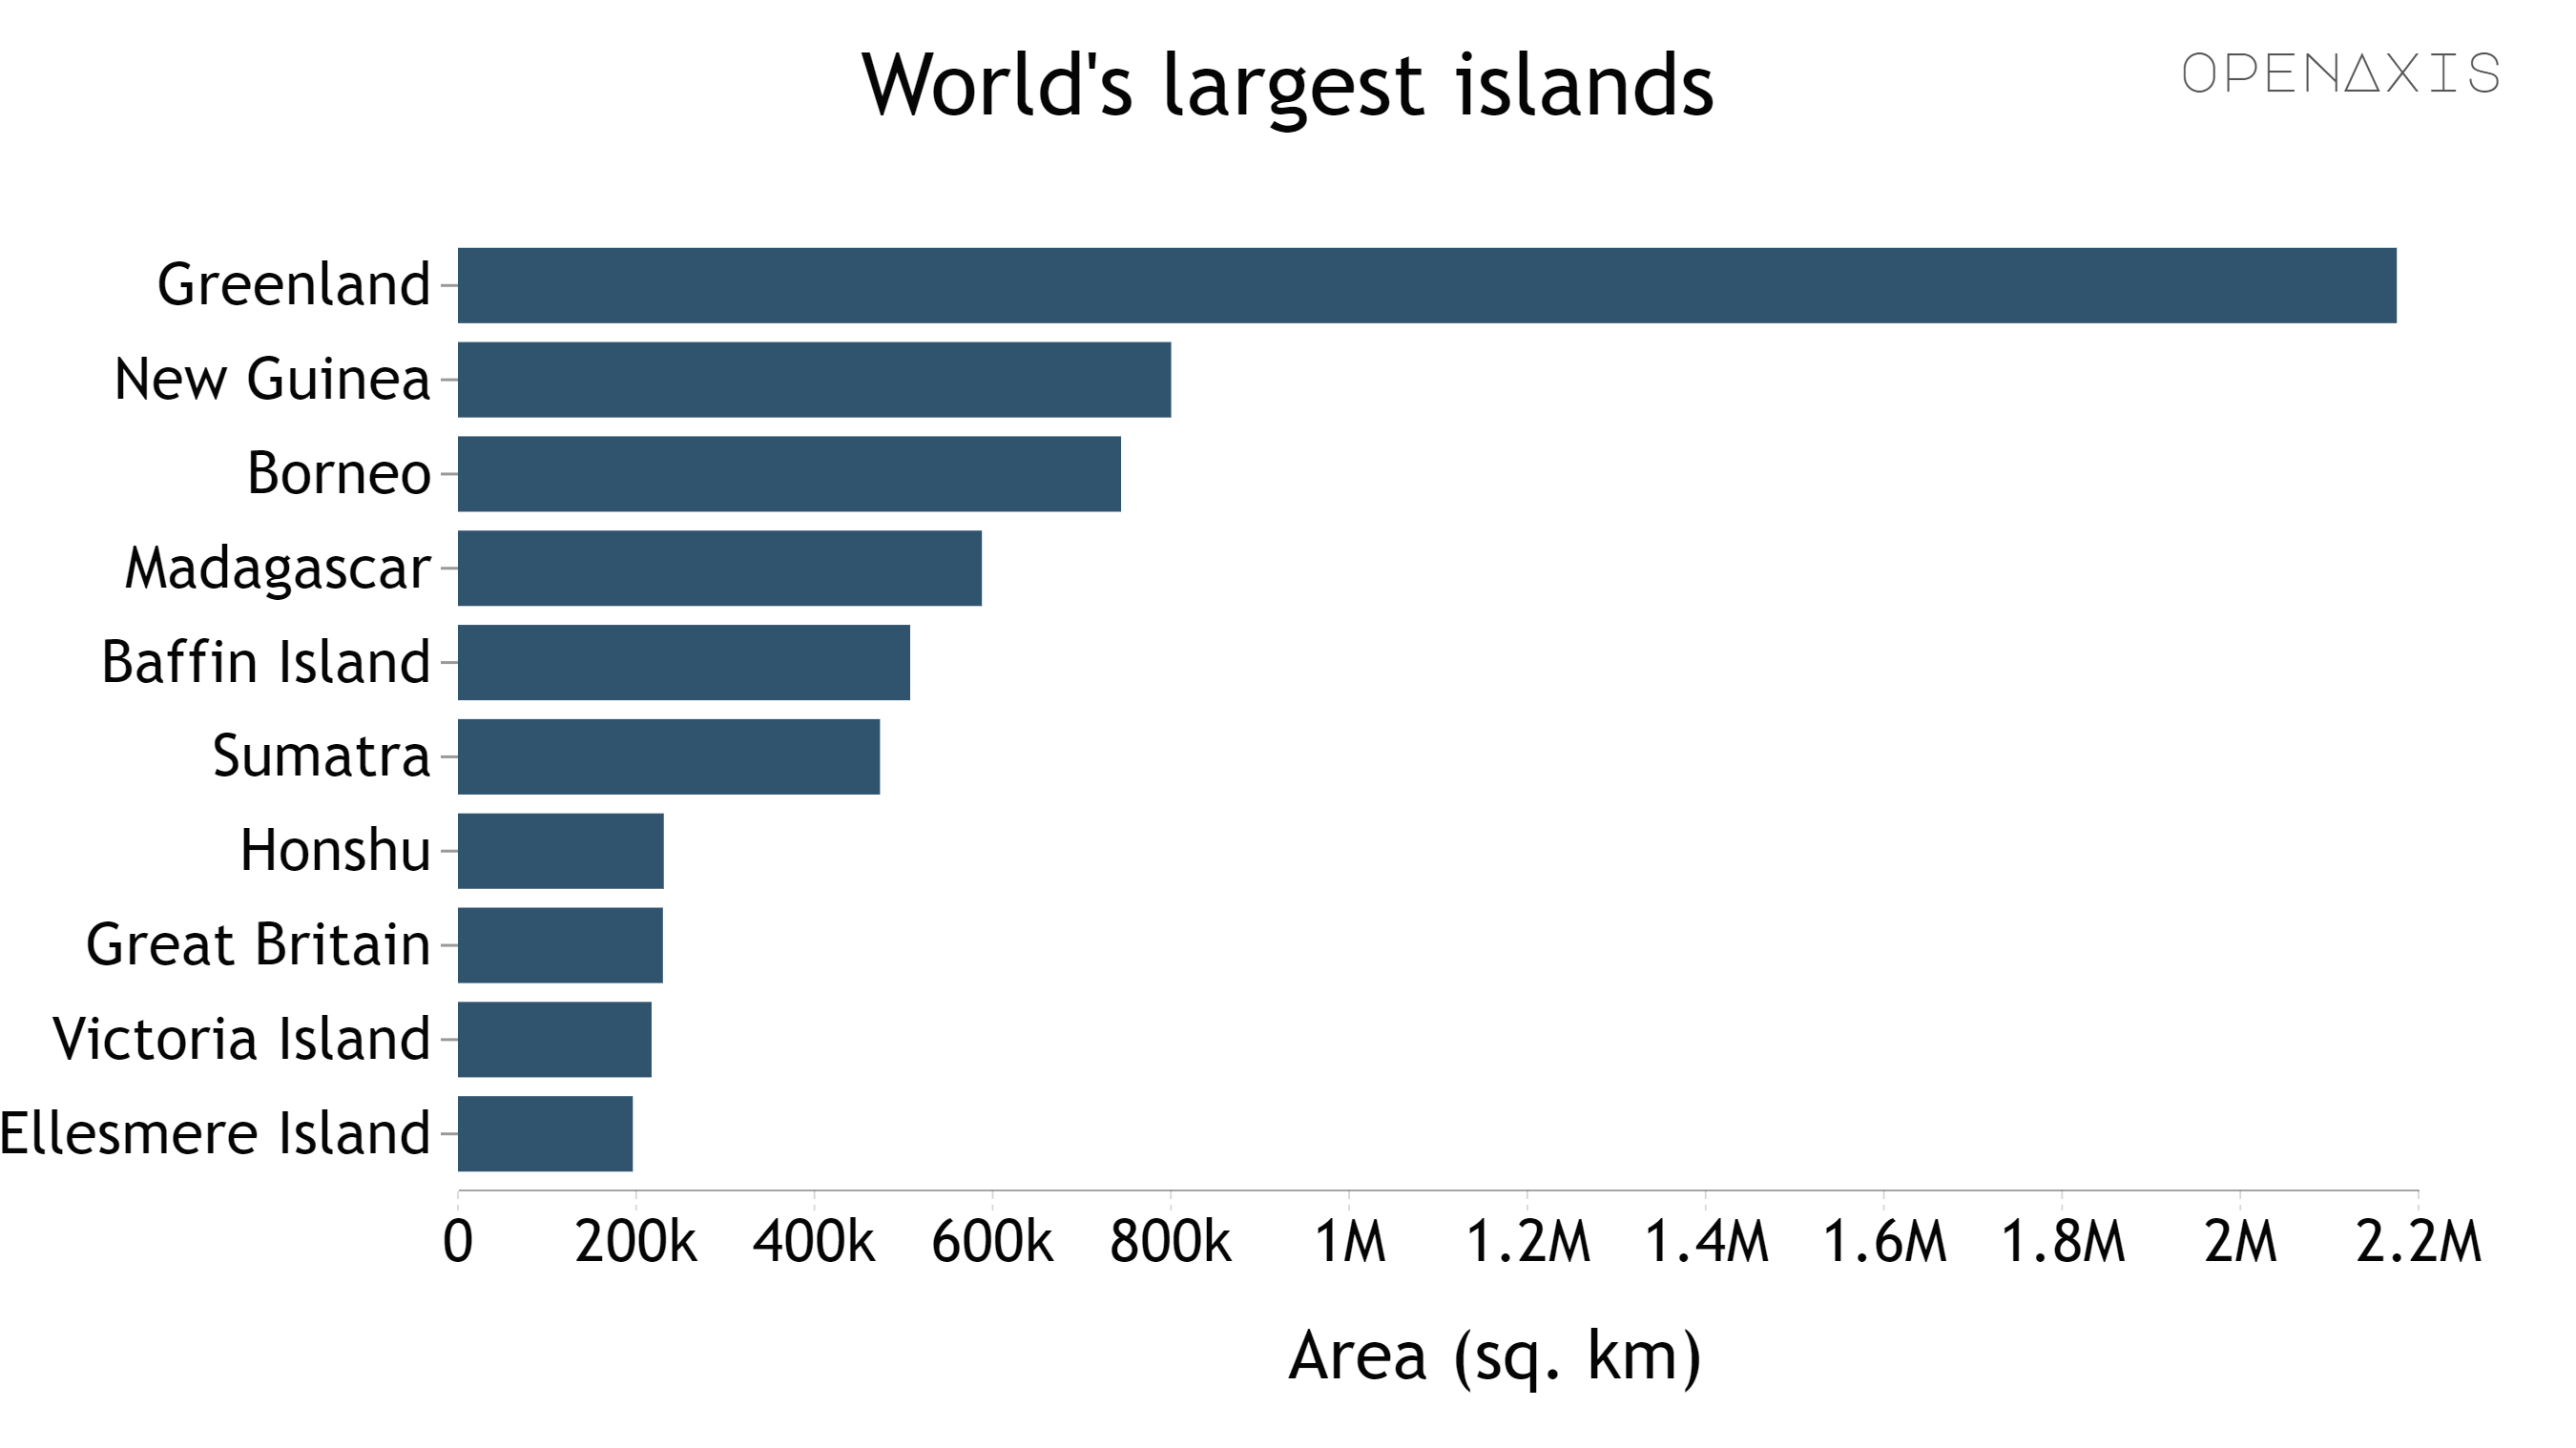 "World's largest islands"